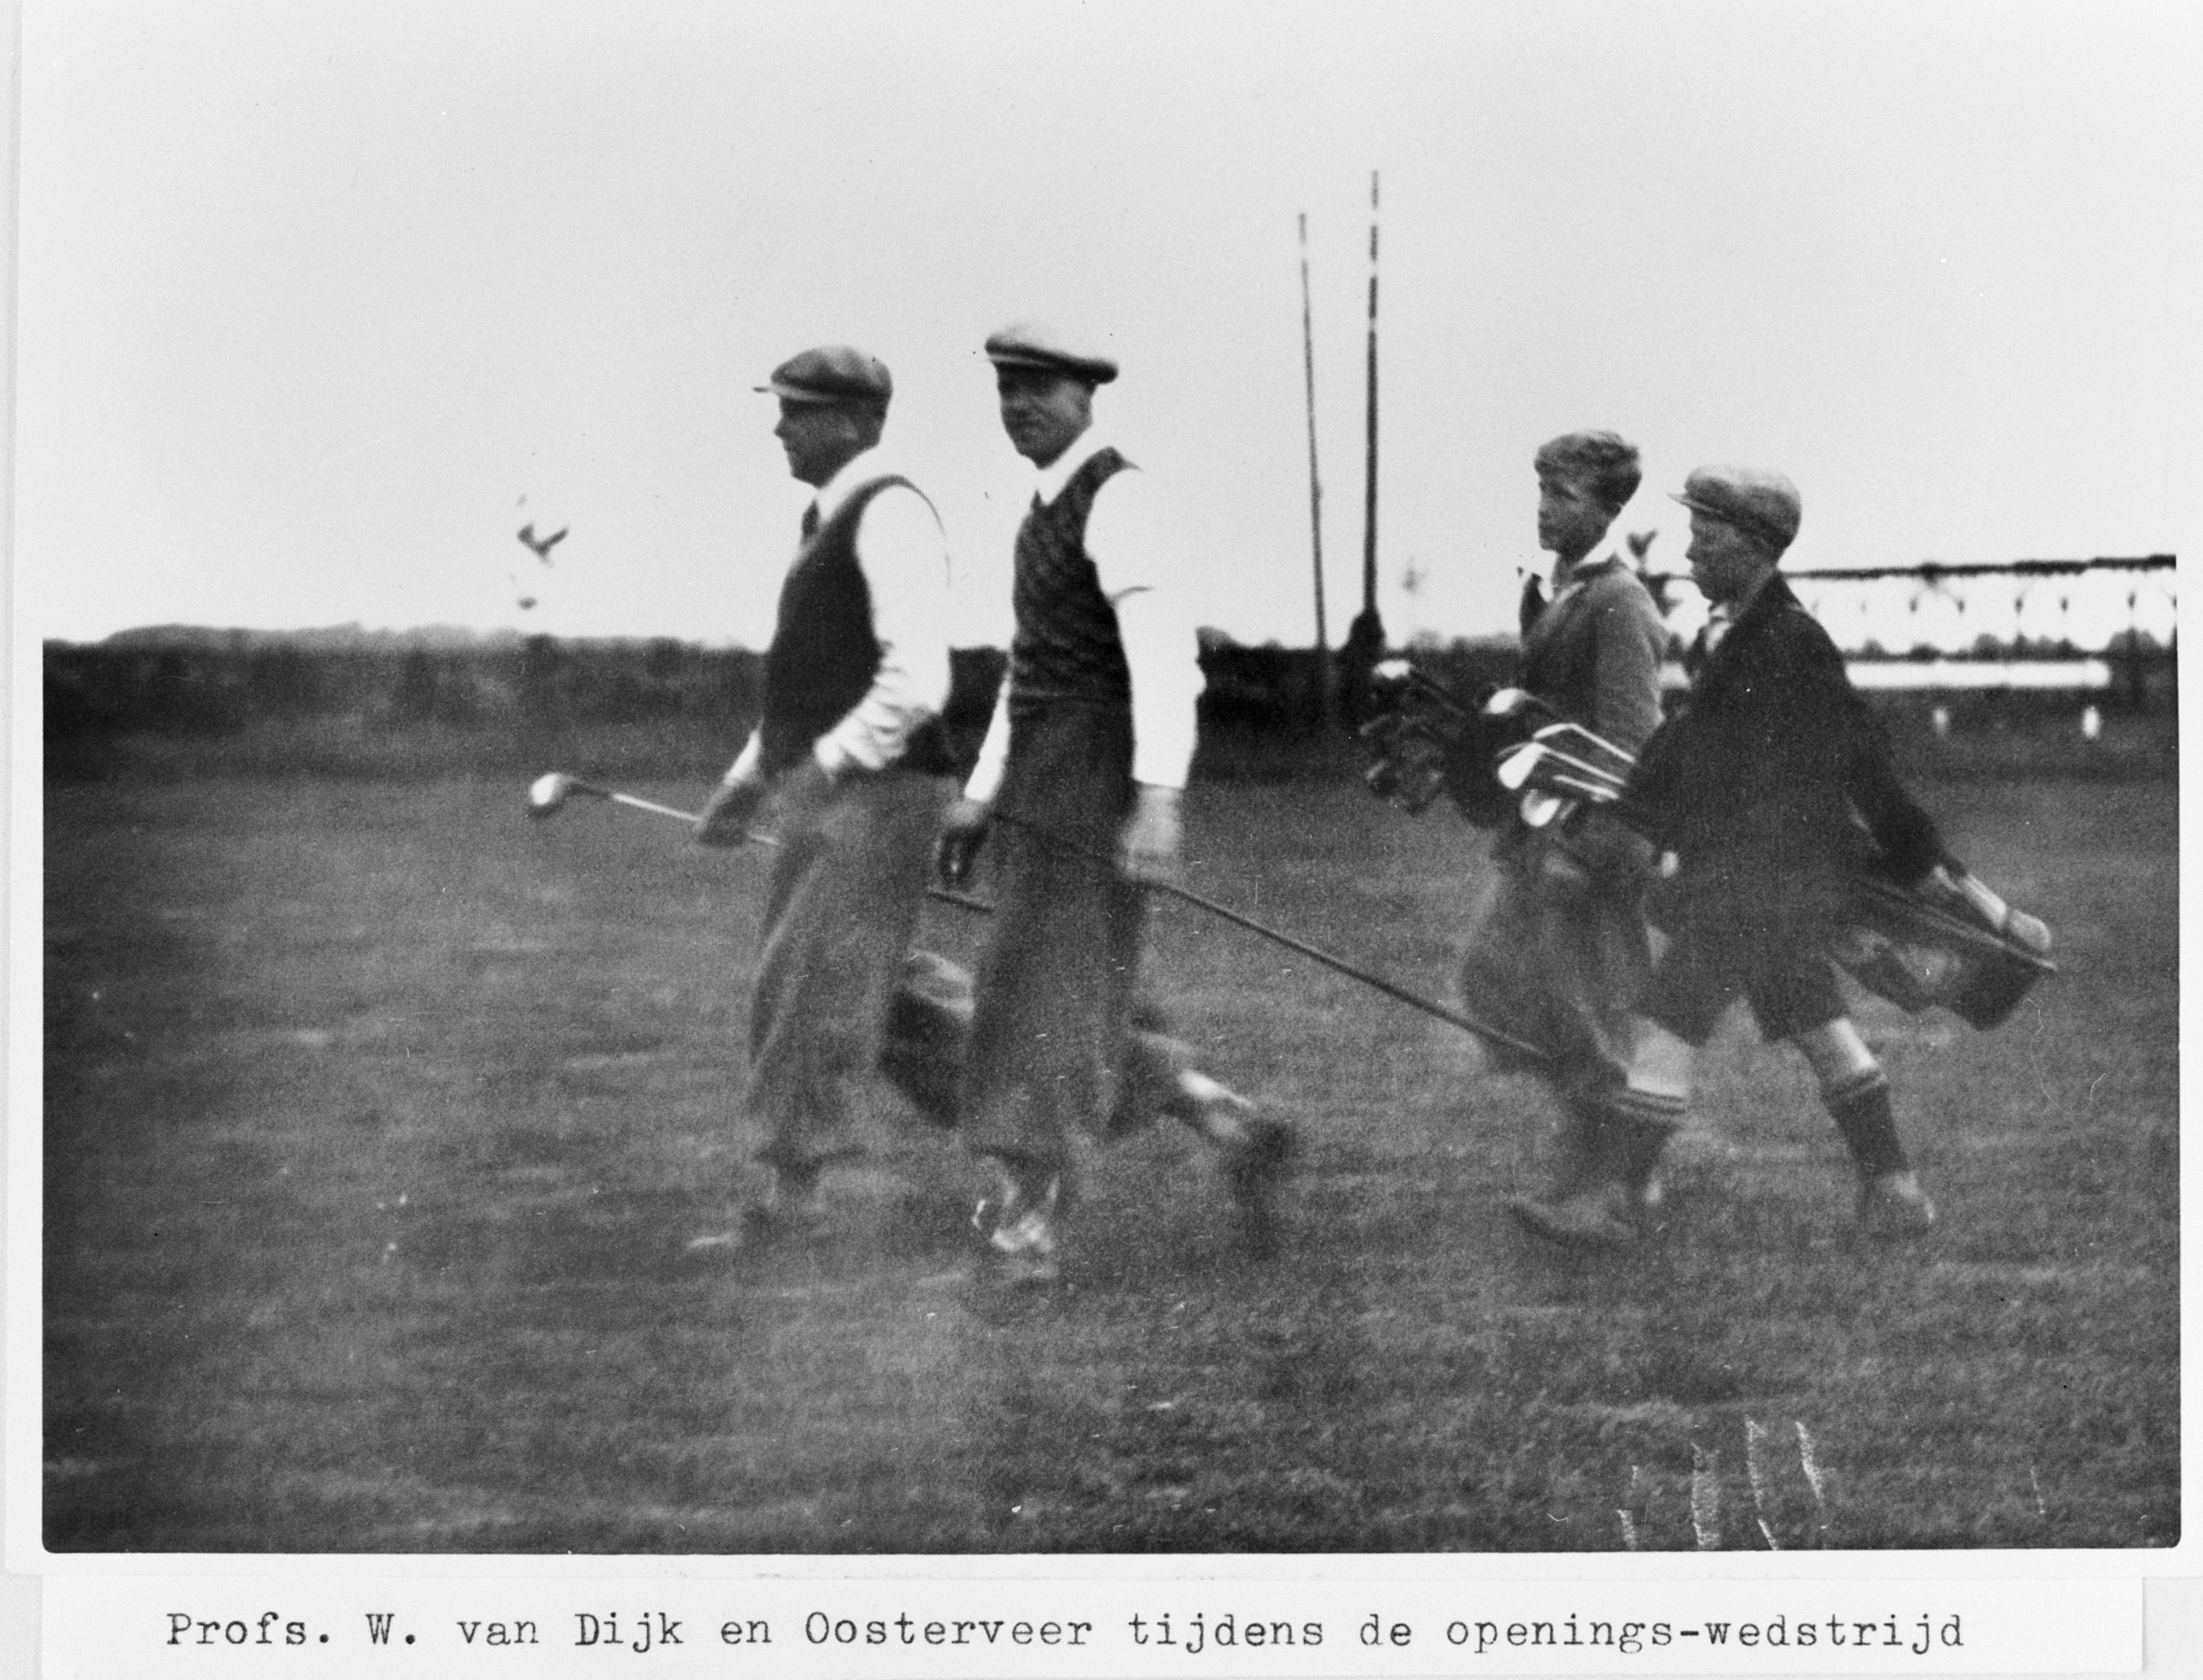 Amsterdamse Golf Club Opening 1935 Van Dijk en Oosterveer 2 aaa